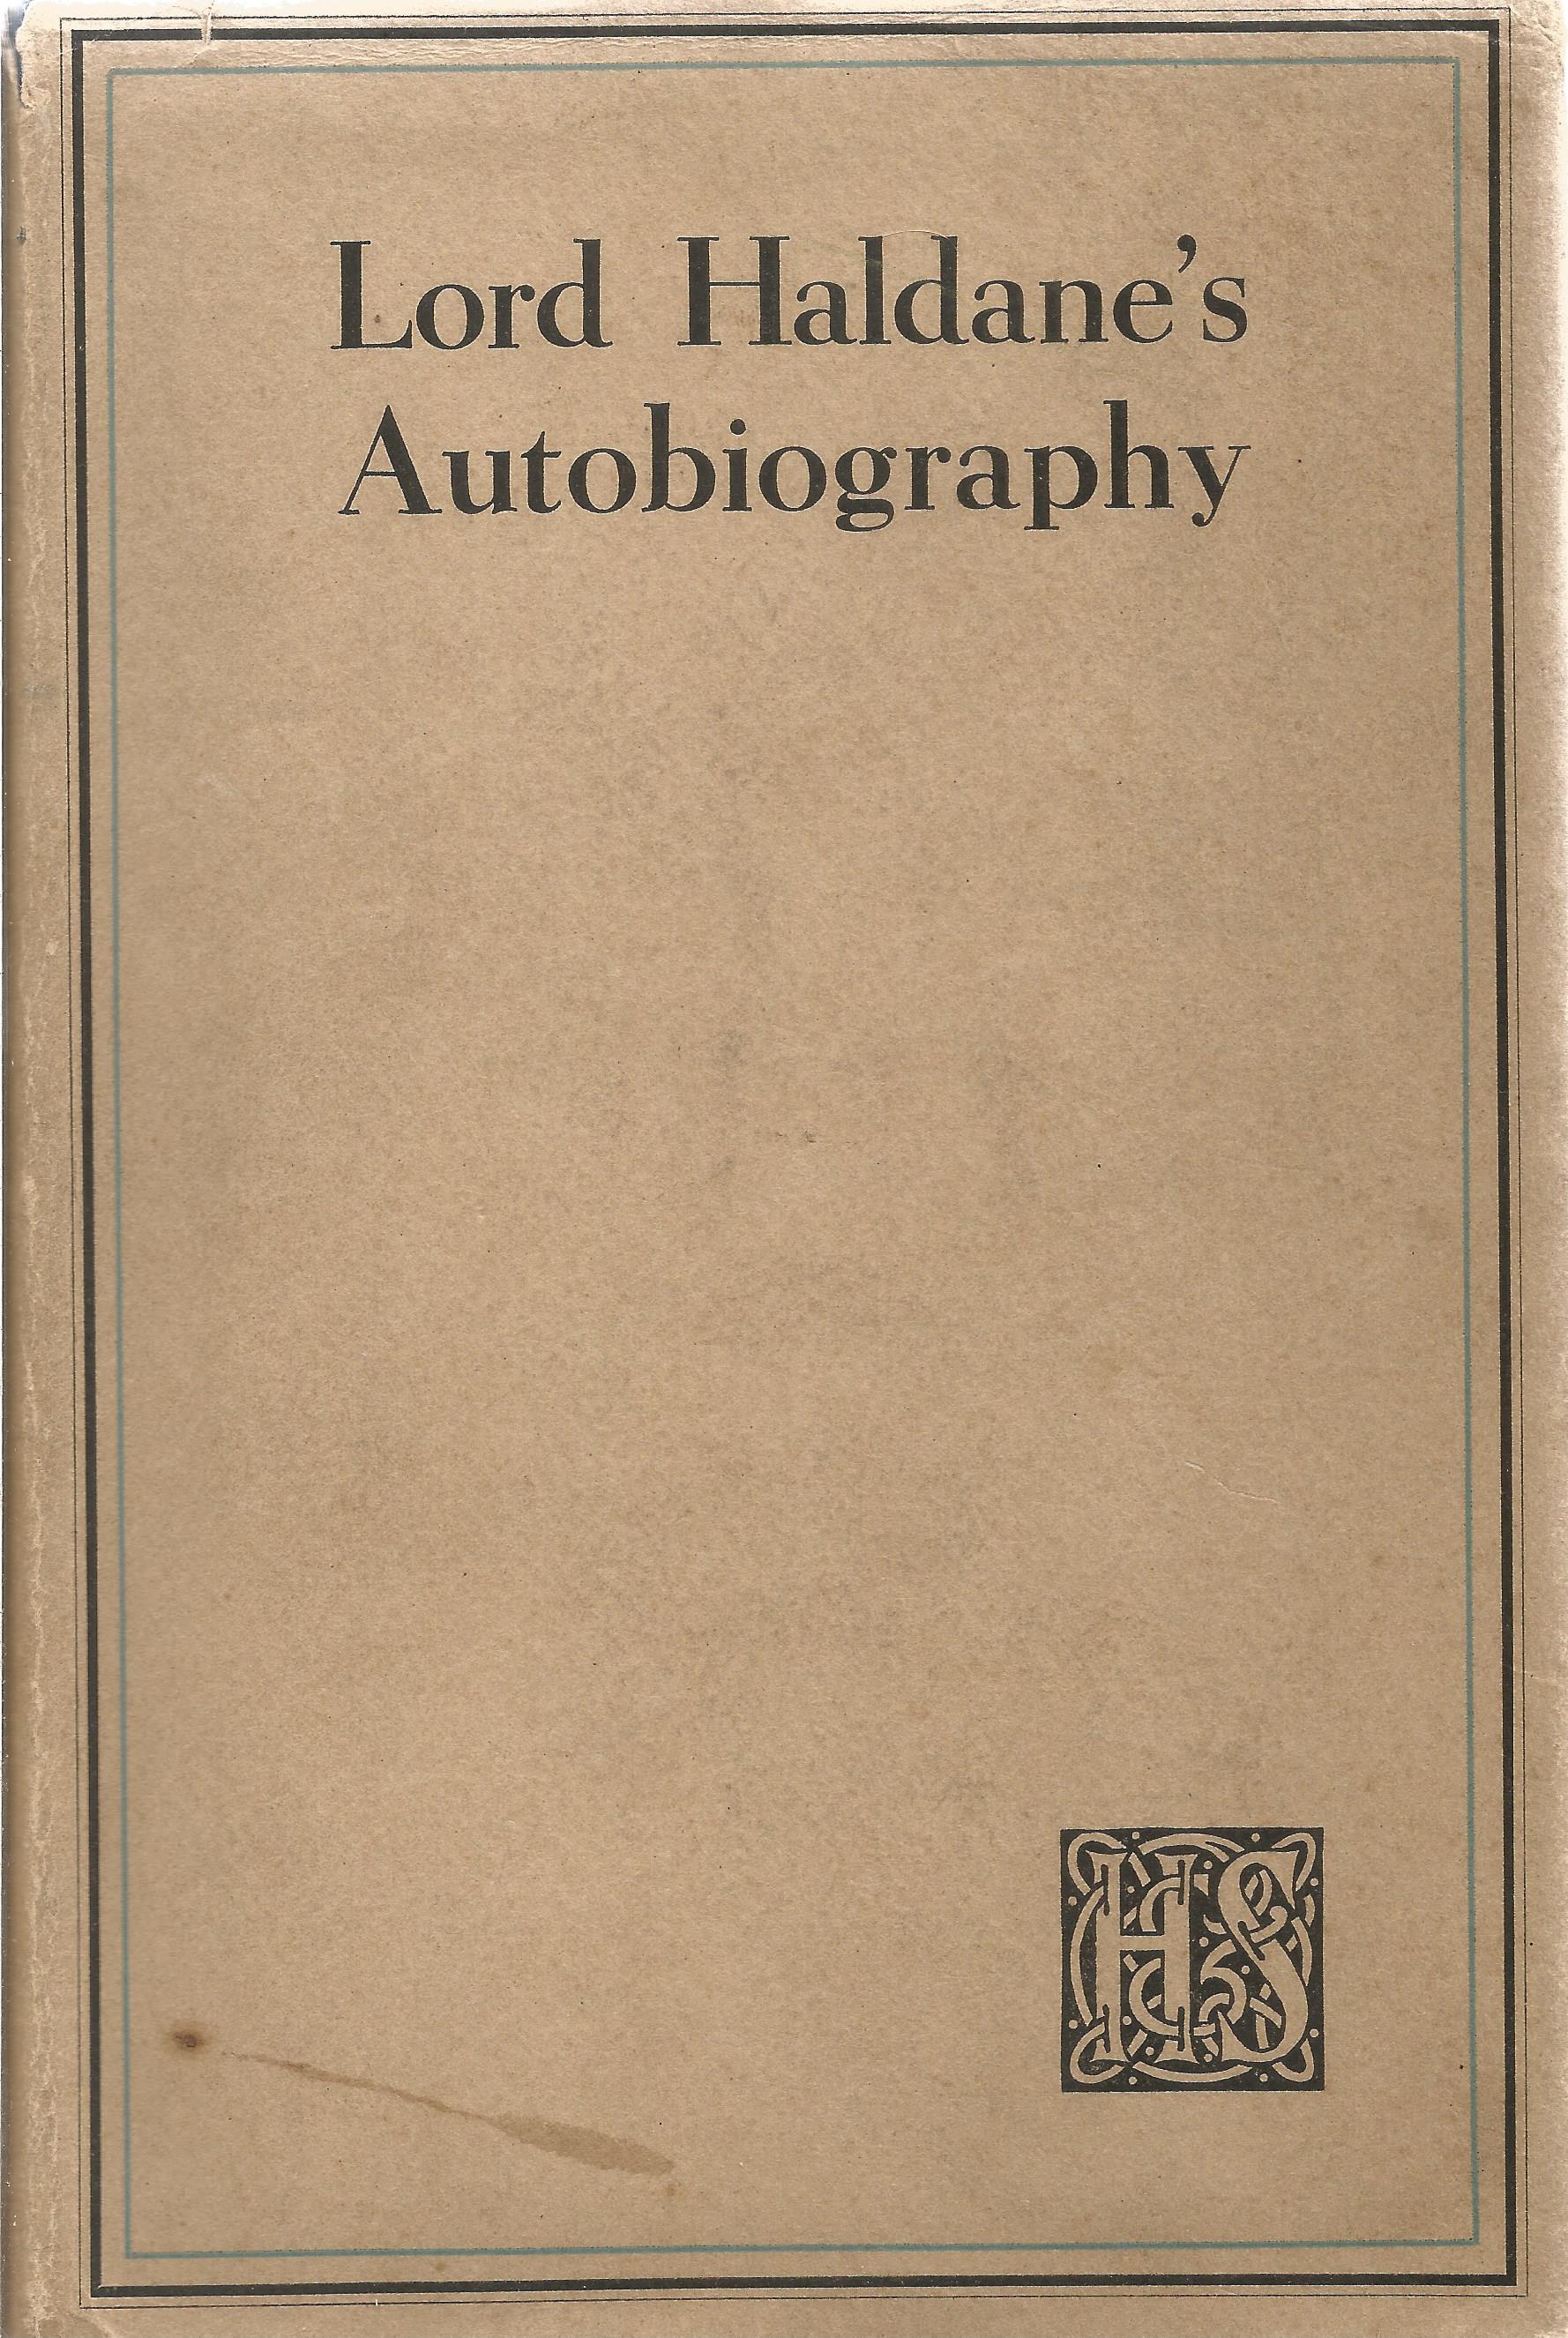 Lord Haldane's Autobiography by Richard Burdon Haldane (Lord Haldane of Cloan) 1929 Hardback Book